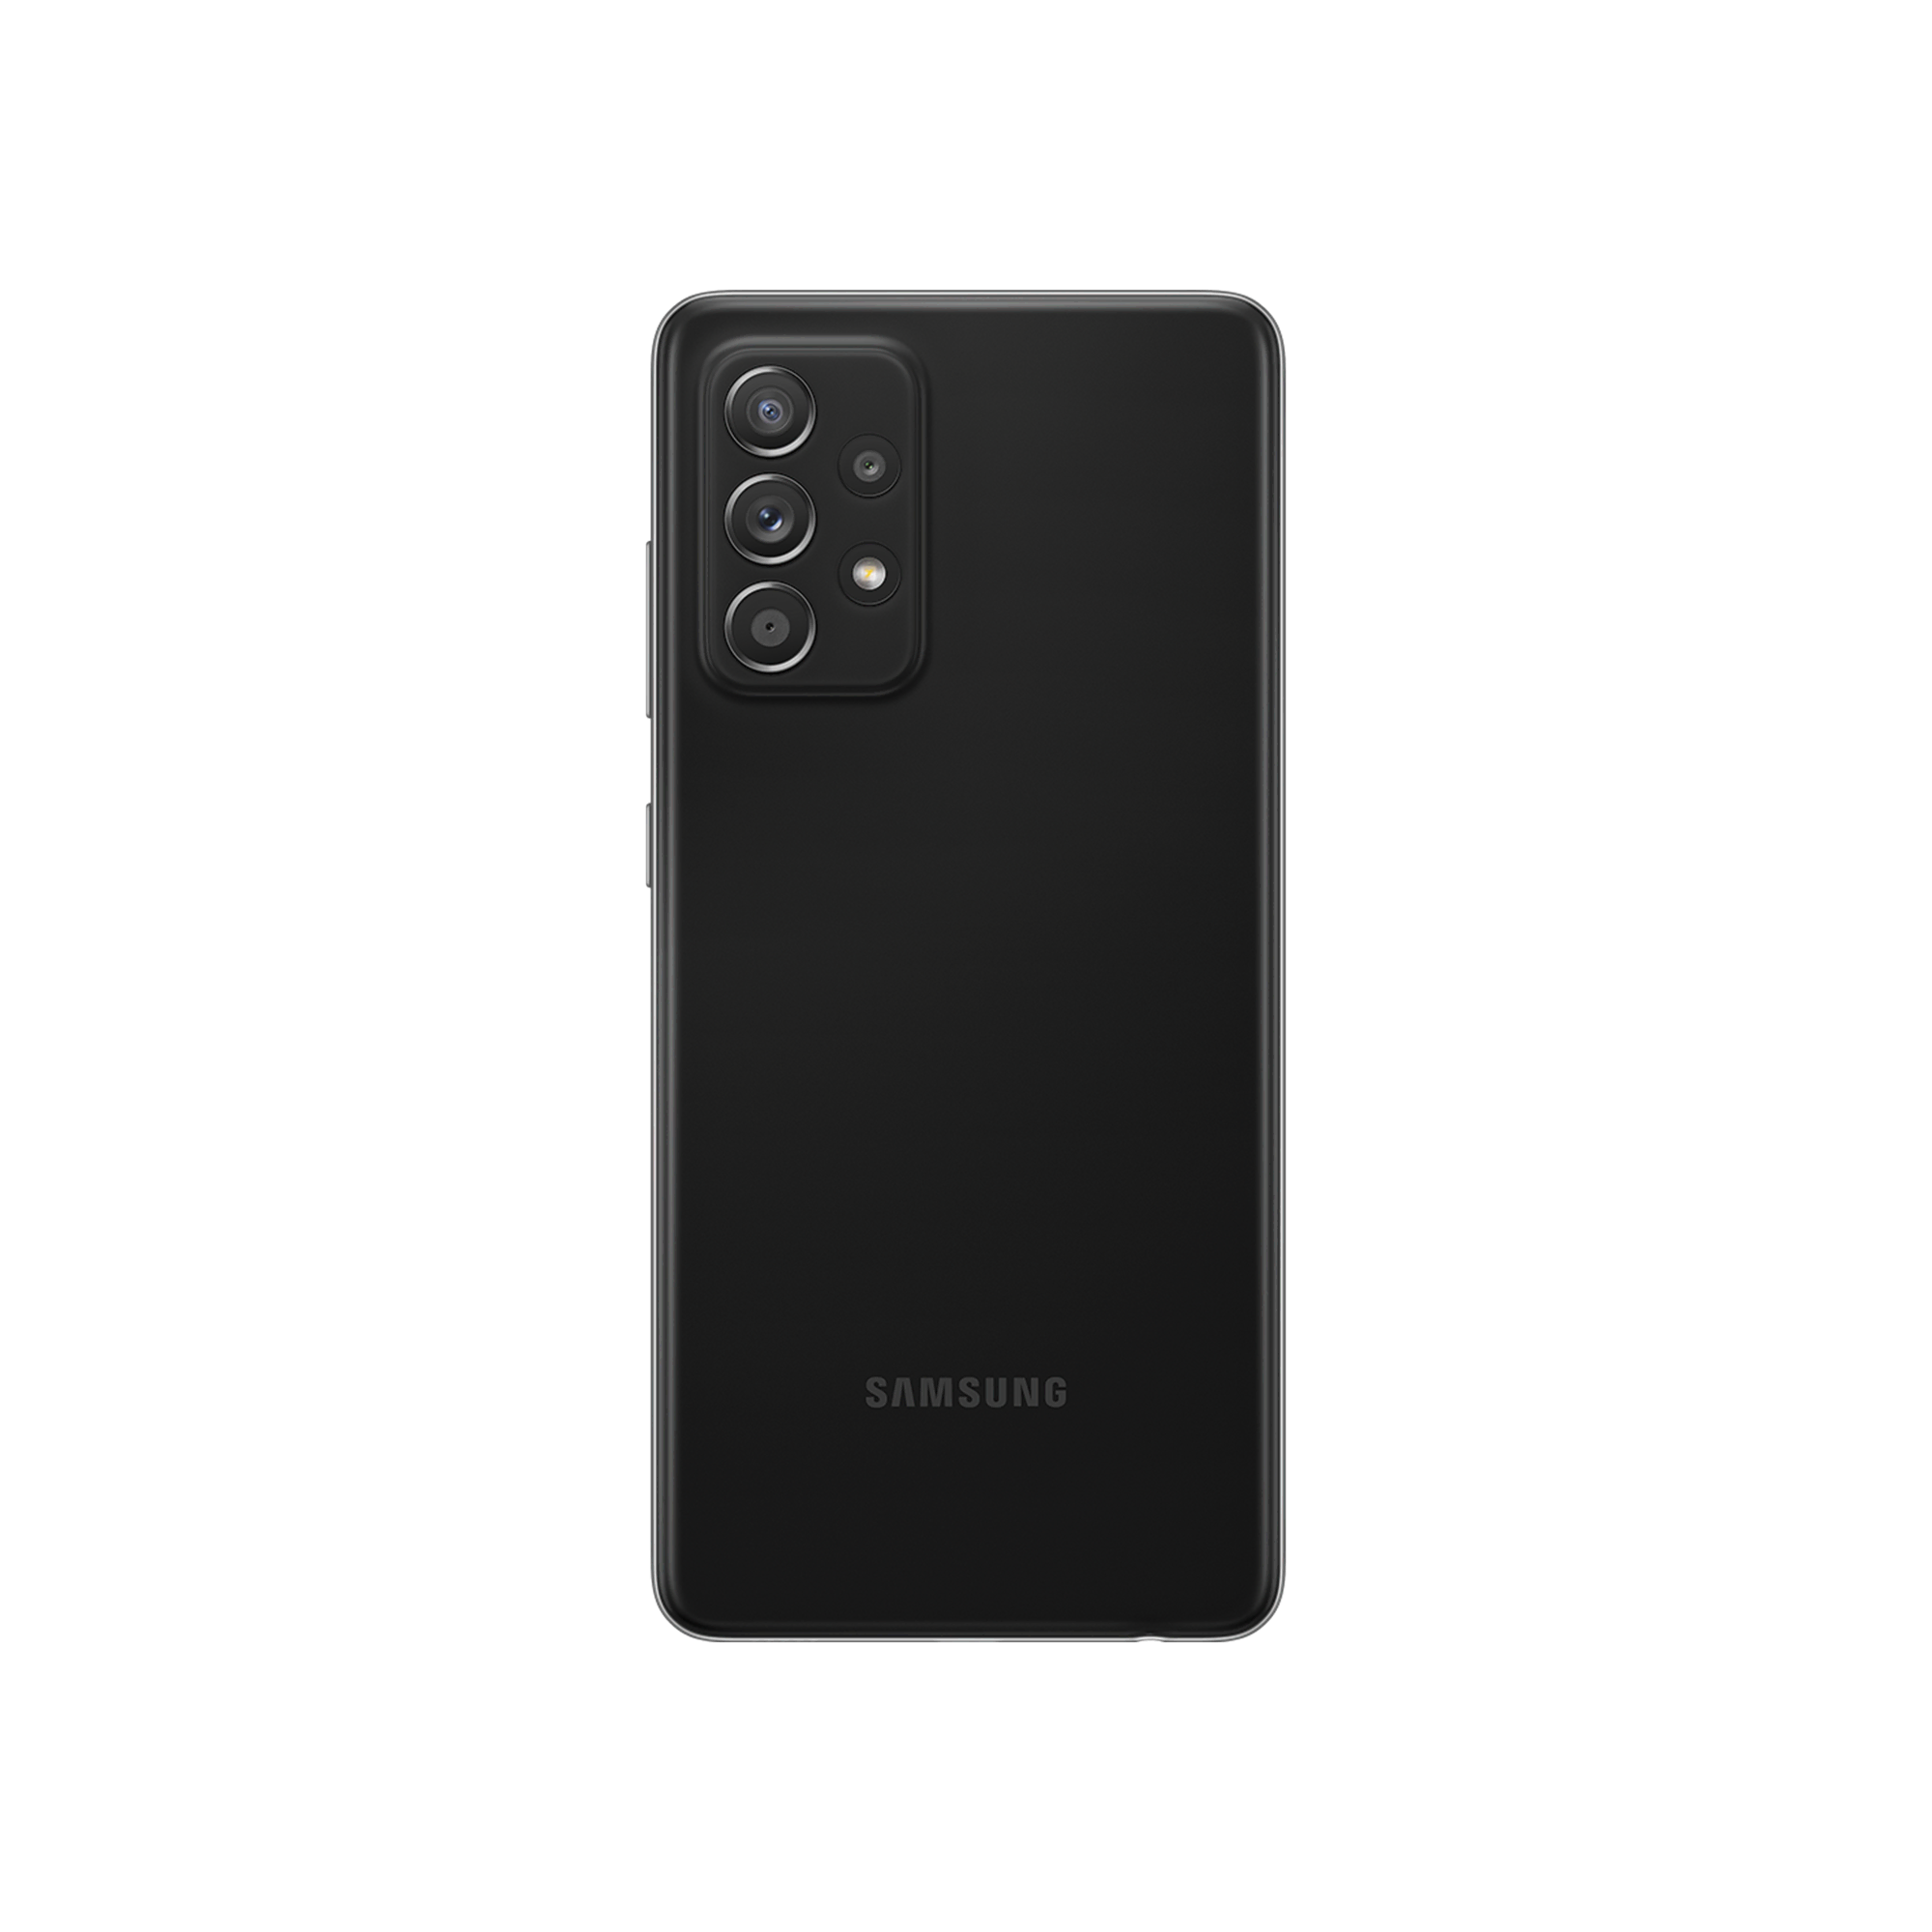 SAMSUNG Galaxy A52 128GB Siyah Android Telefon Modelleri